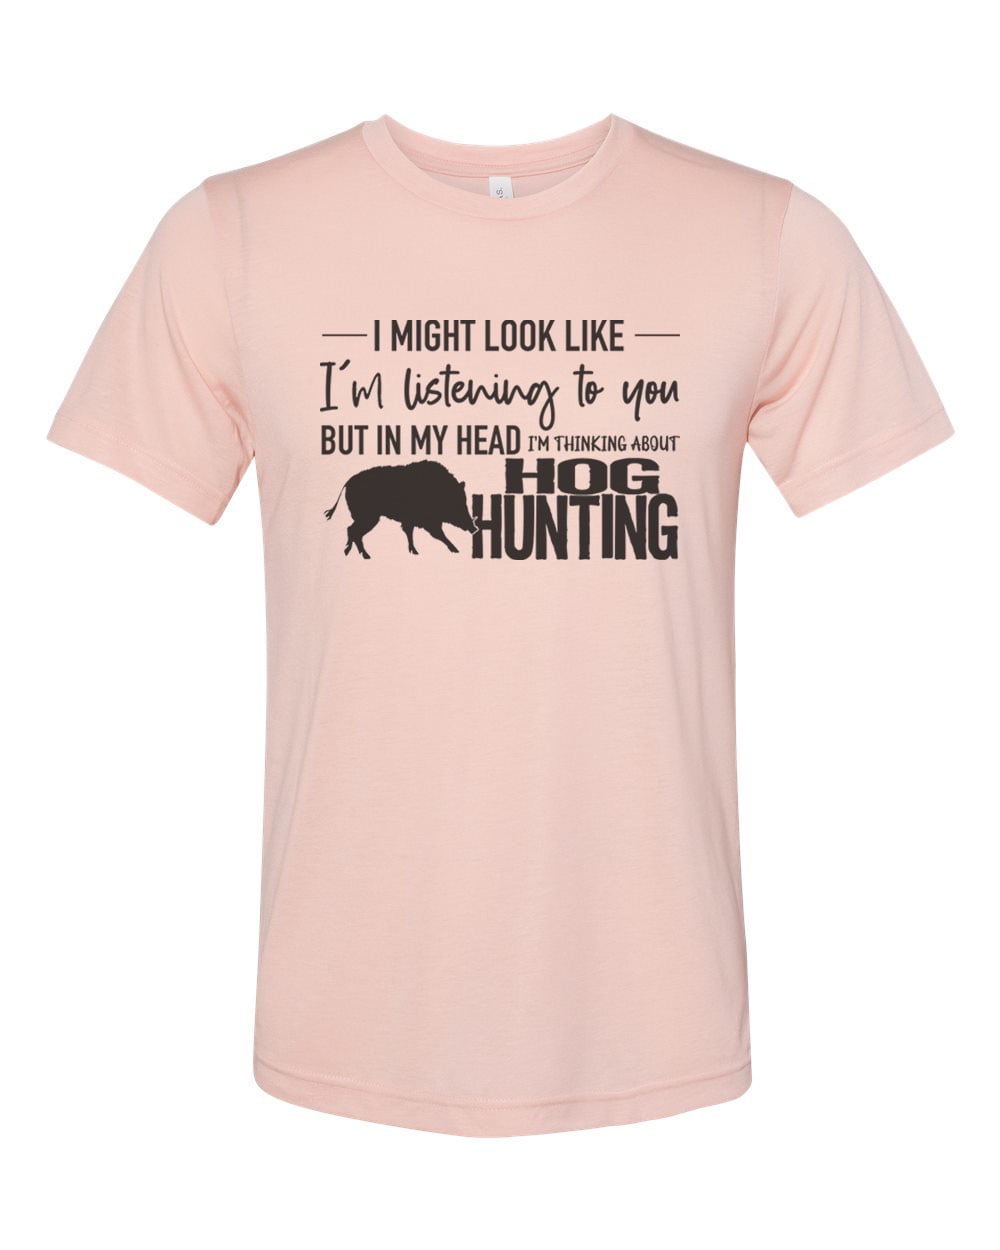 Hog Hunting Shirt, Thinking About Hog Hunting, Wild Boar Hunting